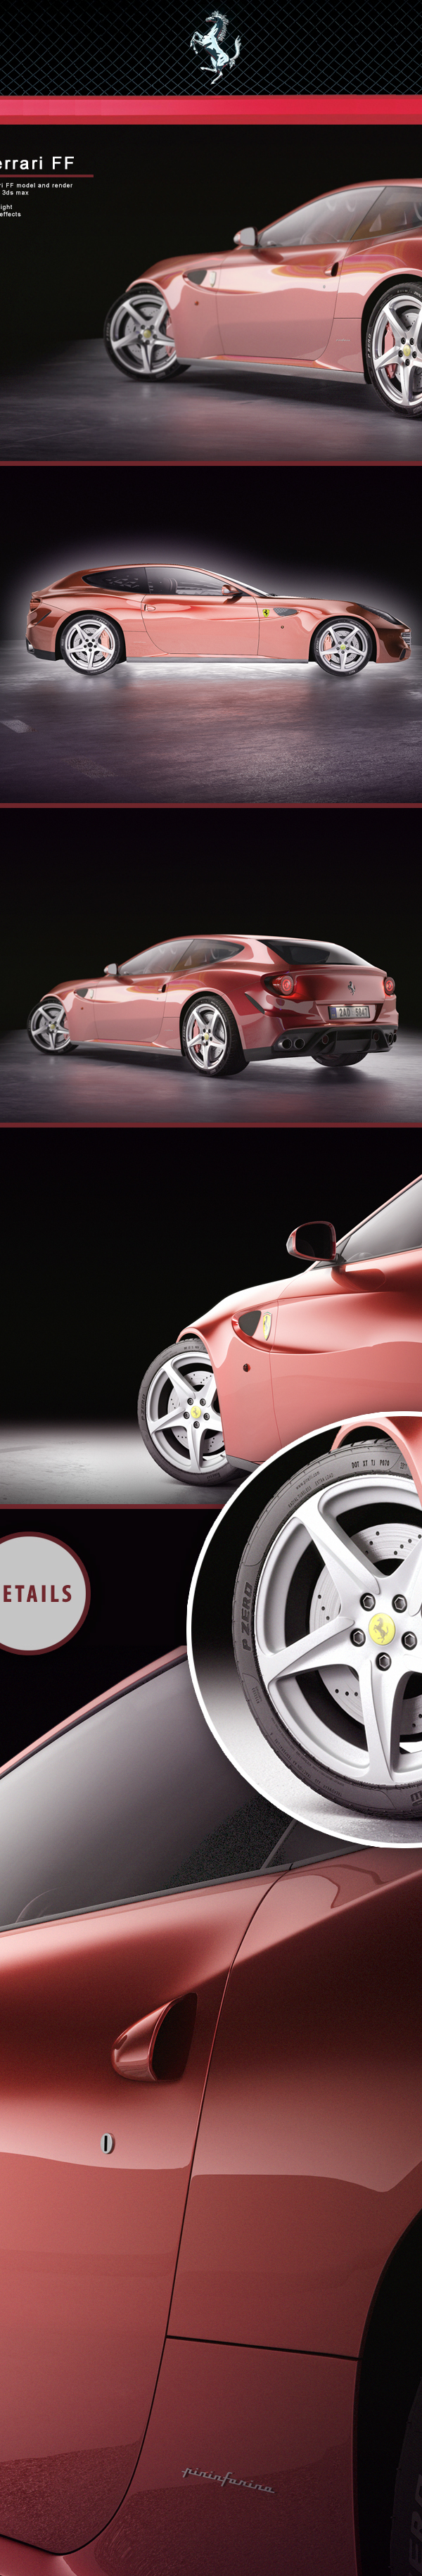 Ferrari FF 3M 1080 Custom Wrap on Behance